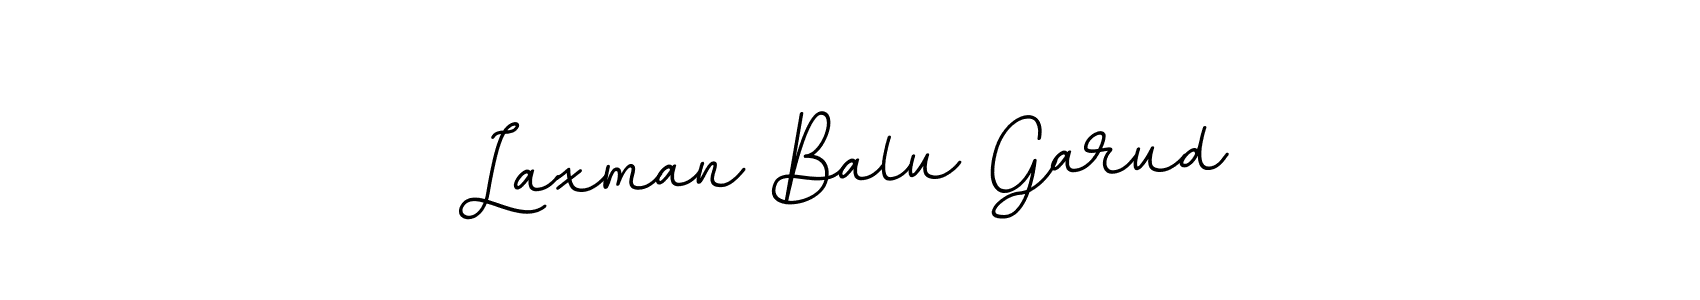 How to Draw Laxman Balu Garud signature style? BallpointsItalic-DORy9 is a latest design signature styles for name Laxman Balu Garud. Laxman Balu Garud signature style 11 images and pictures png